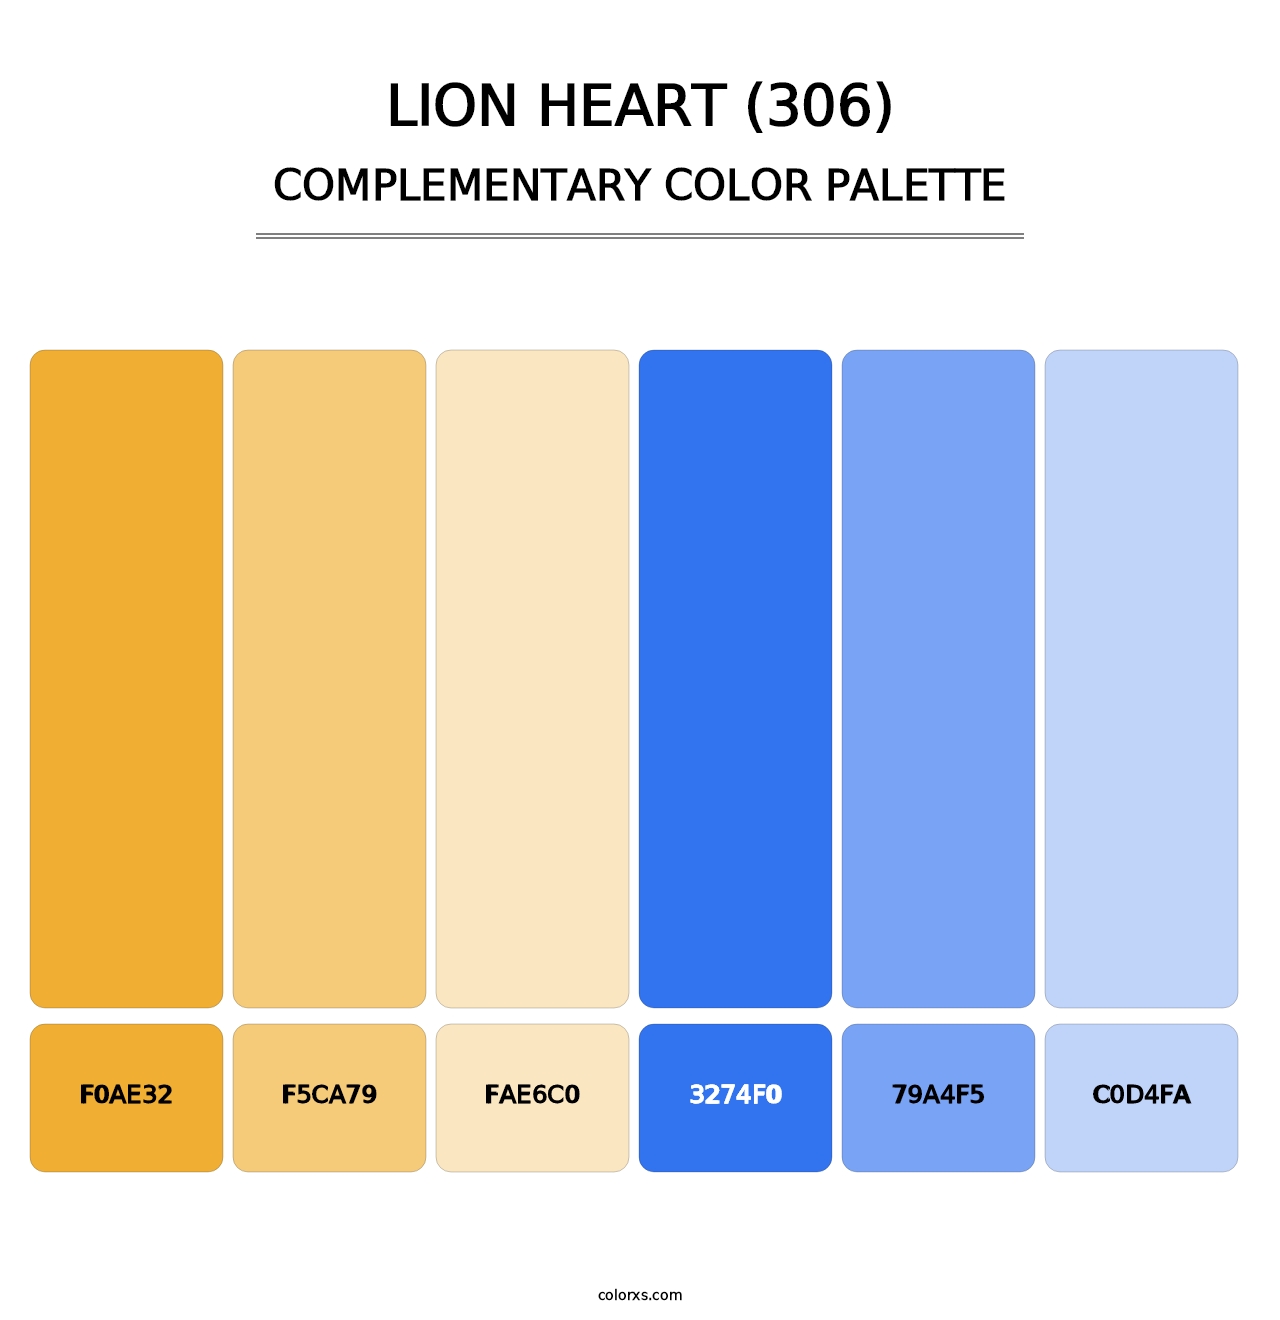 Lion Heart (306) - Complementary Color Palette